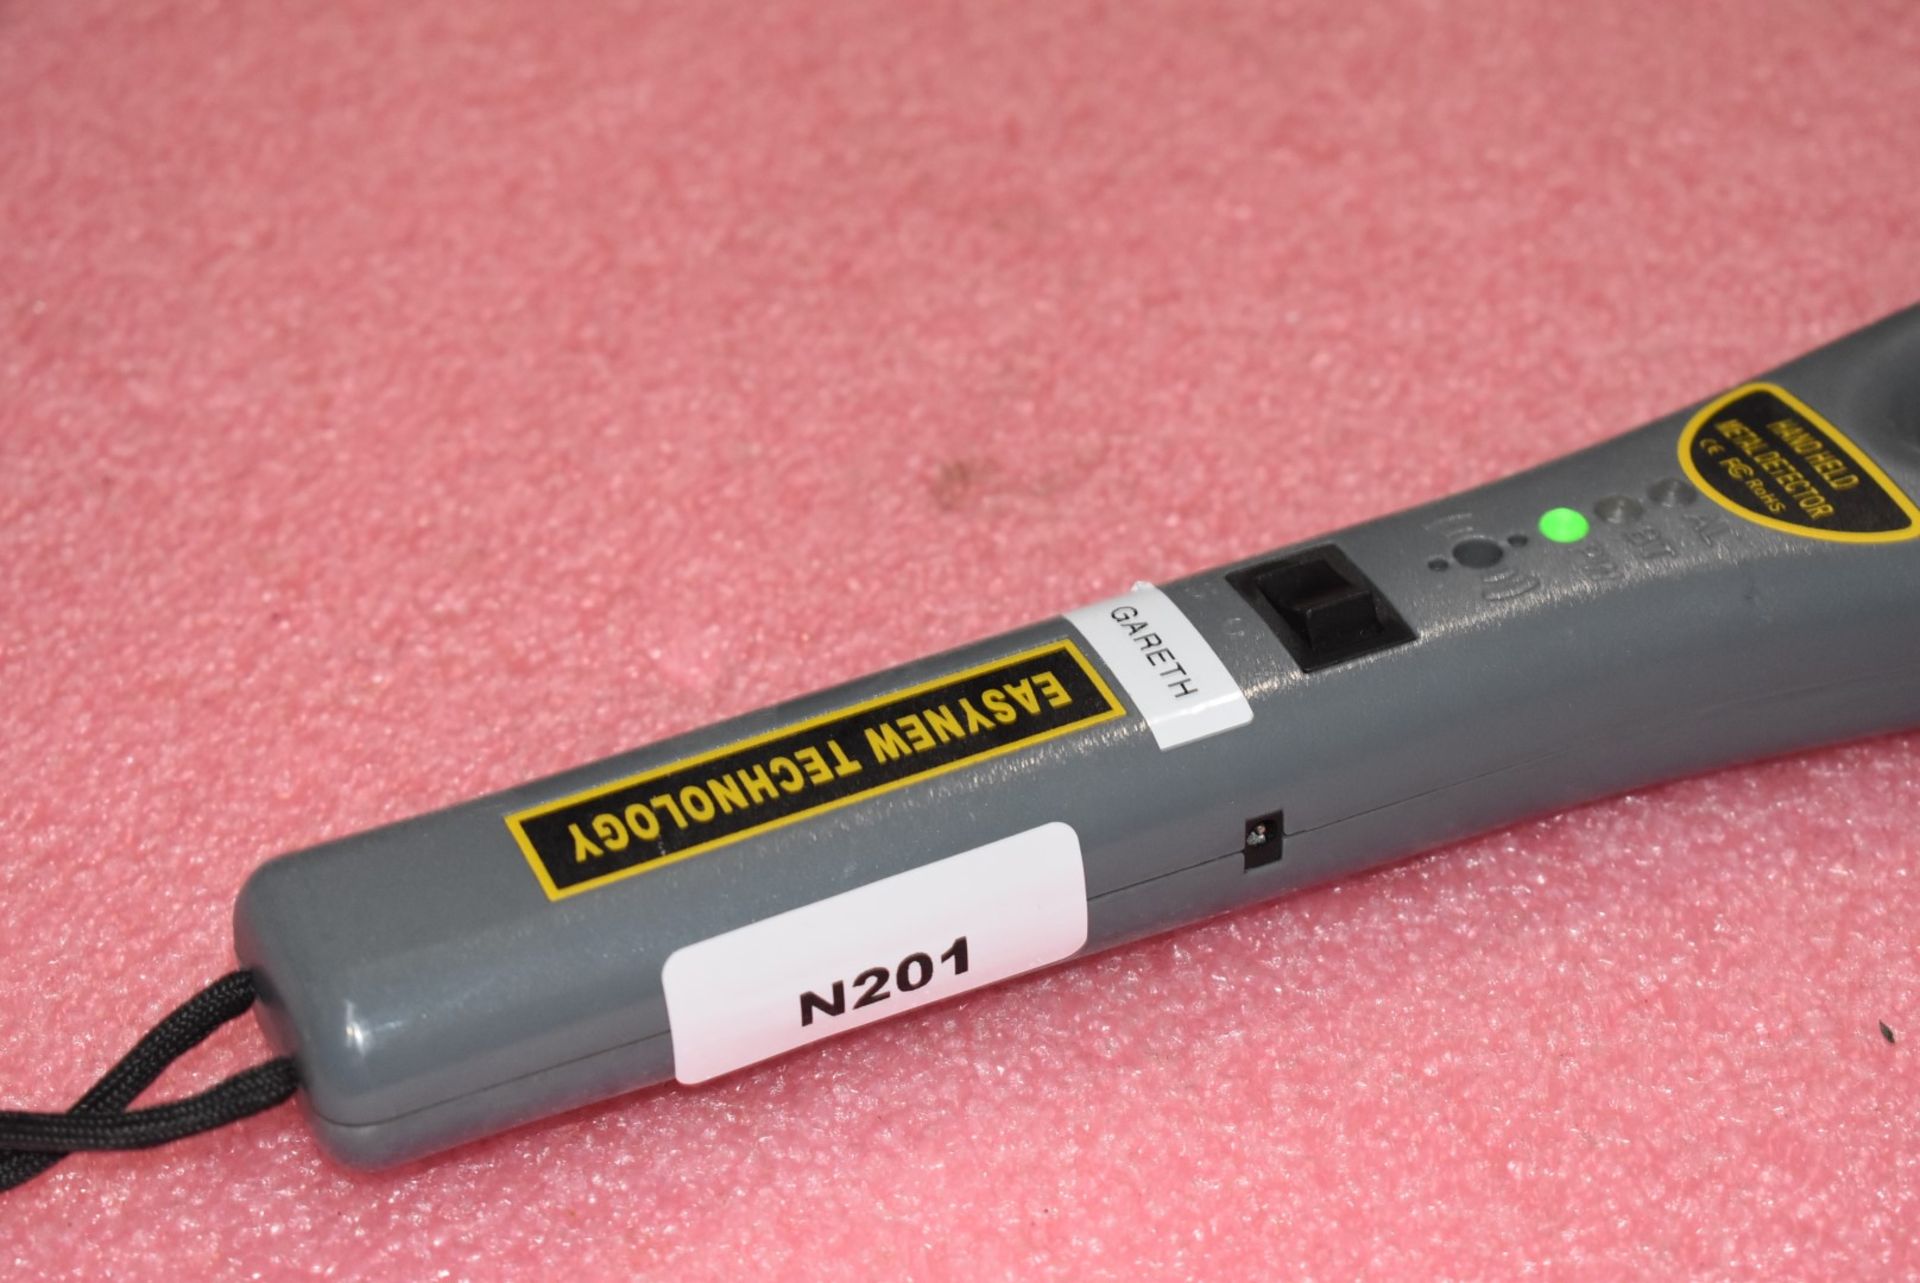 1 x Easynew GC-101H Handheld Metal Detector - Image 3 of 4